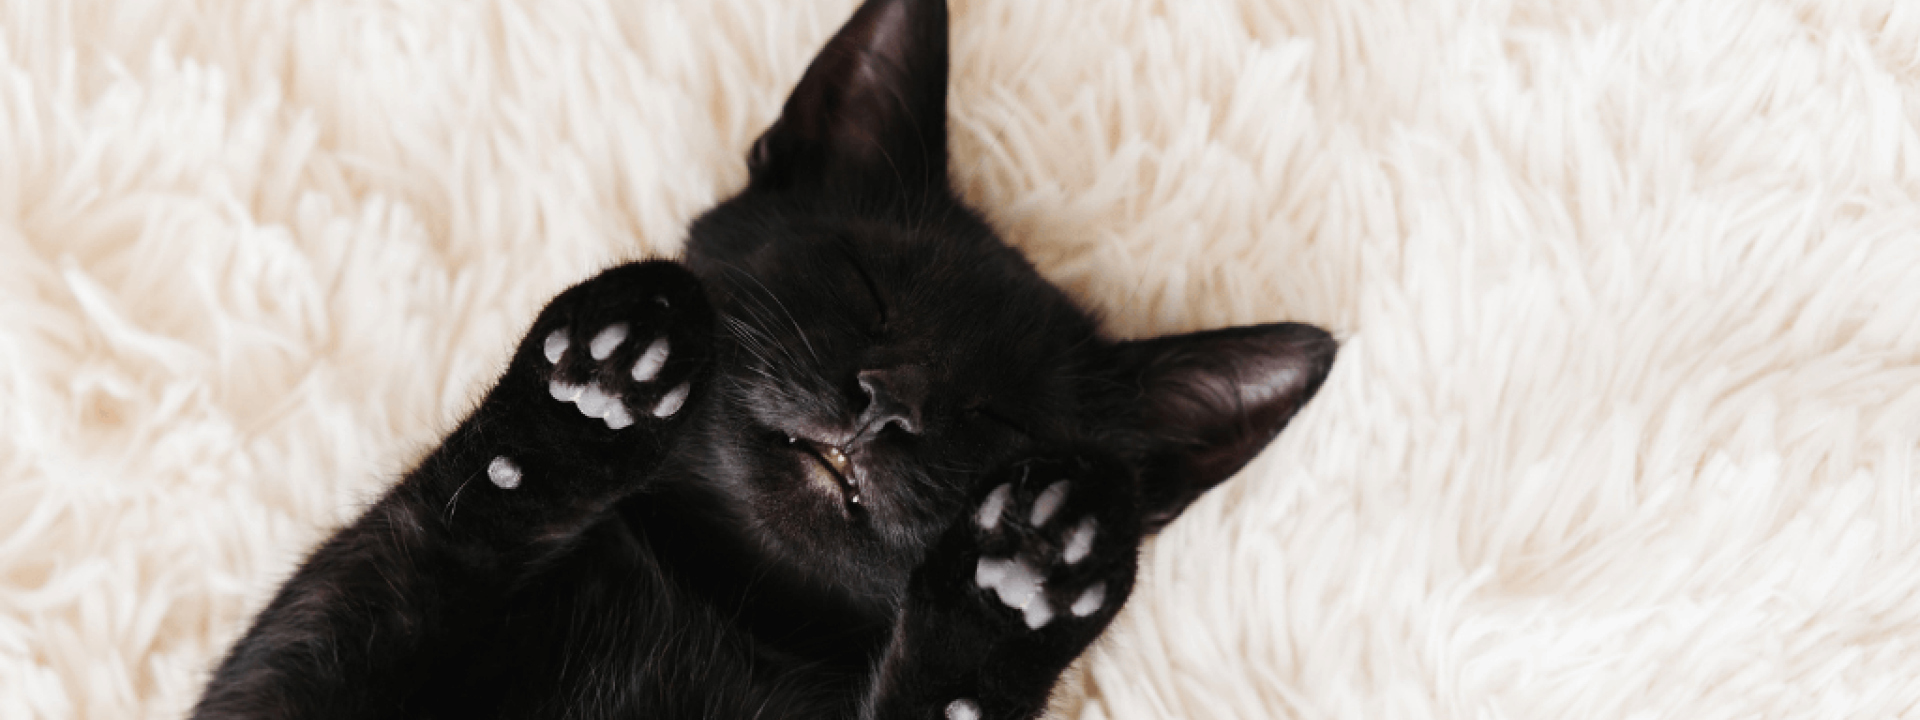 10 reasons to adopt black cats